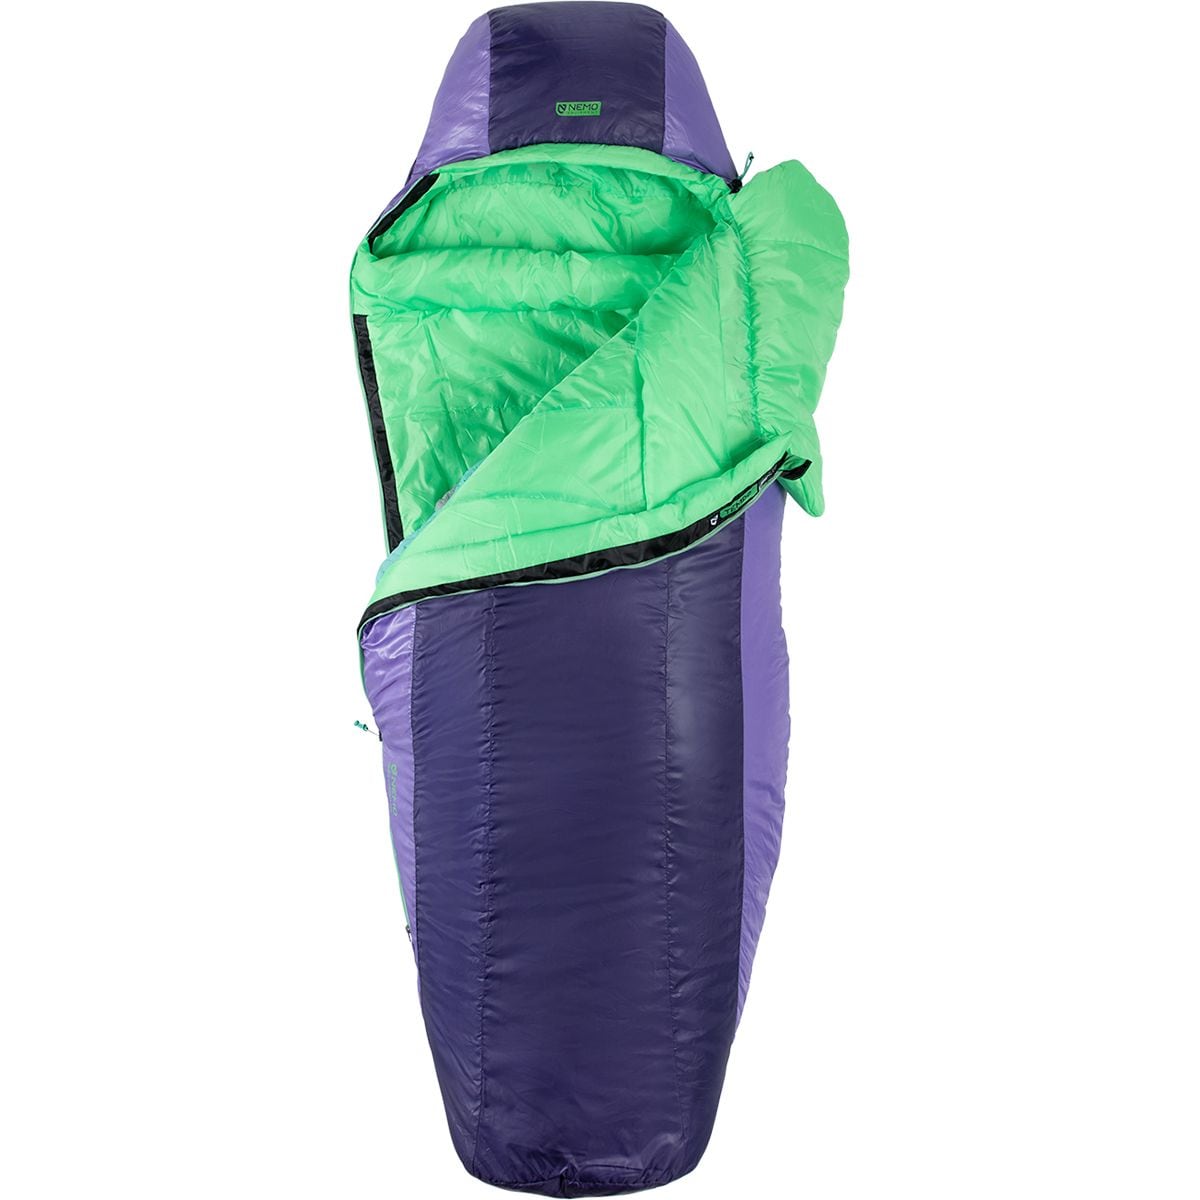 NEMO Equipment Inc. Tempo 20 Sleeping Bag: 20F Synthetic - Women's